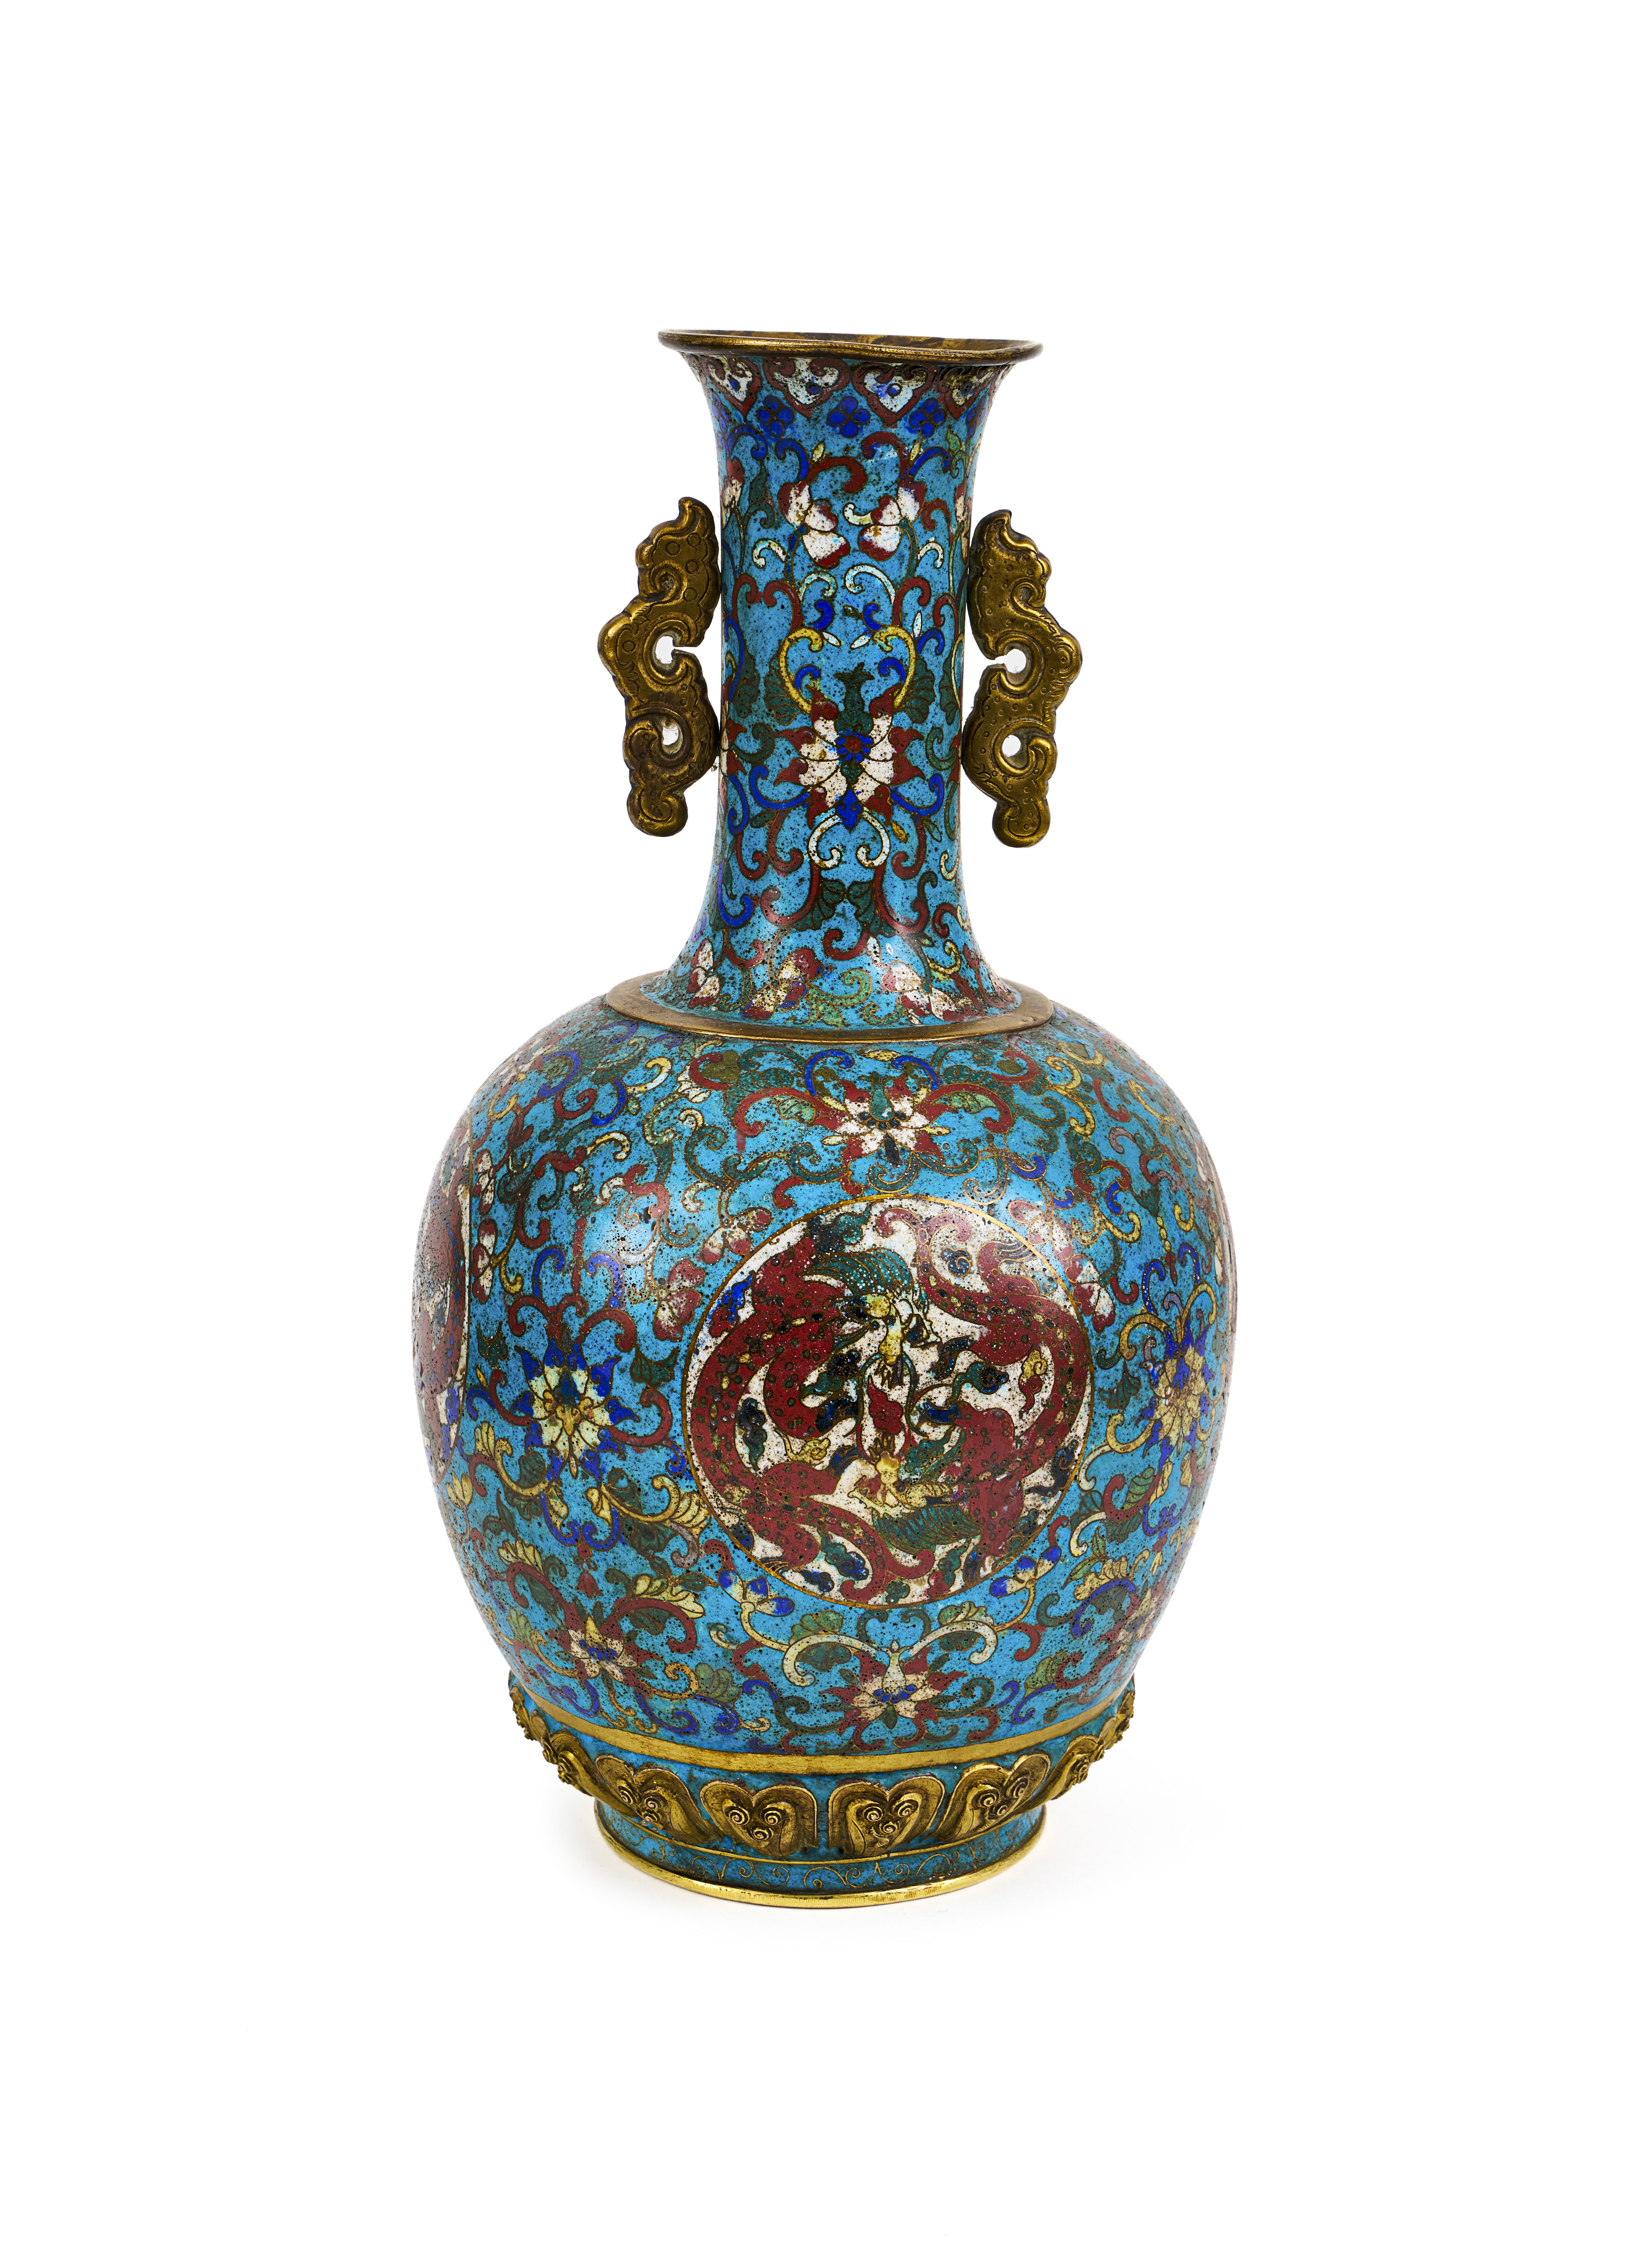 A LARGE CHINESE CLOISONNE VASE, QIANLONG PERIOD (1736-1795)